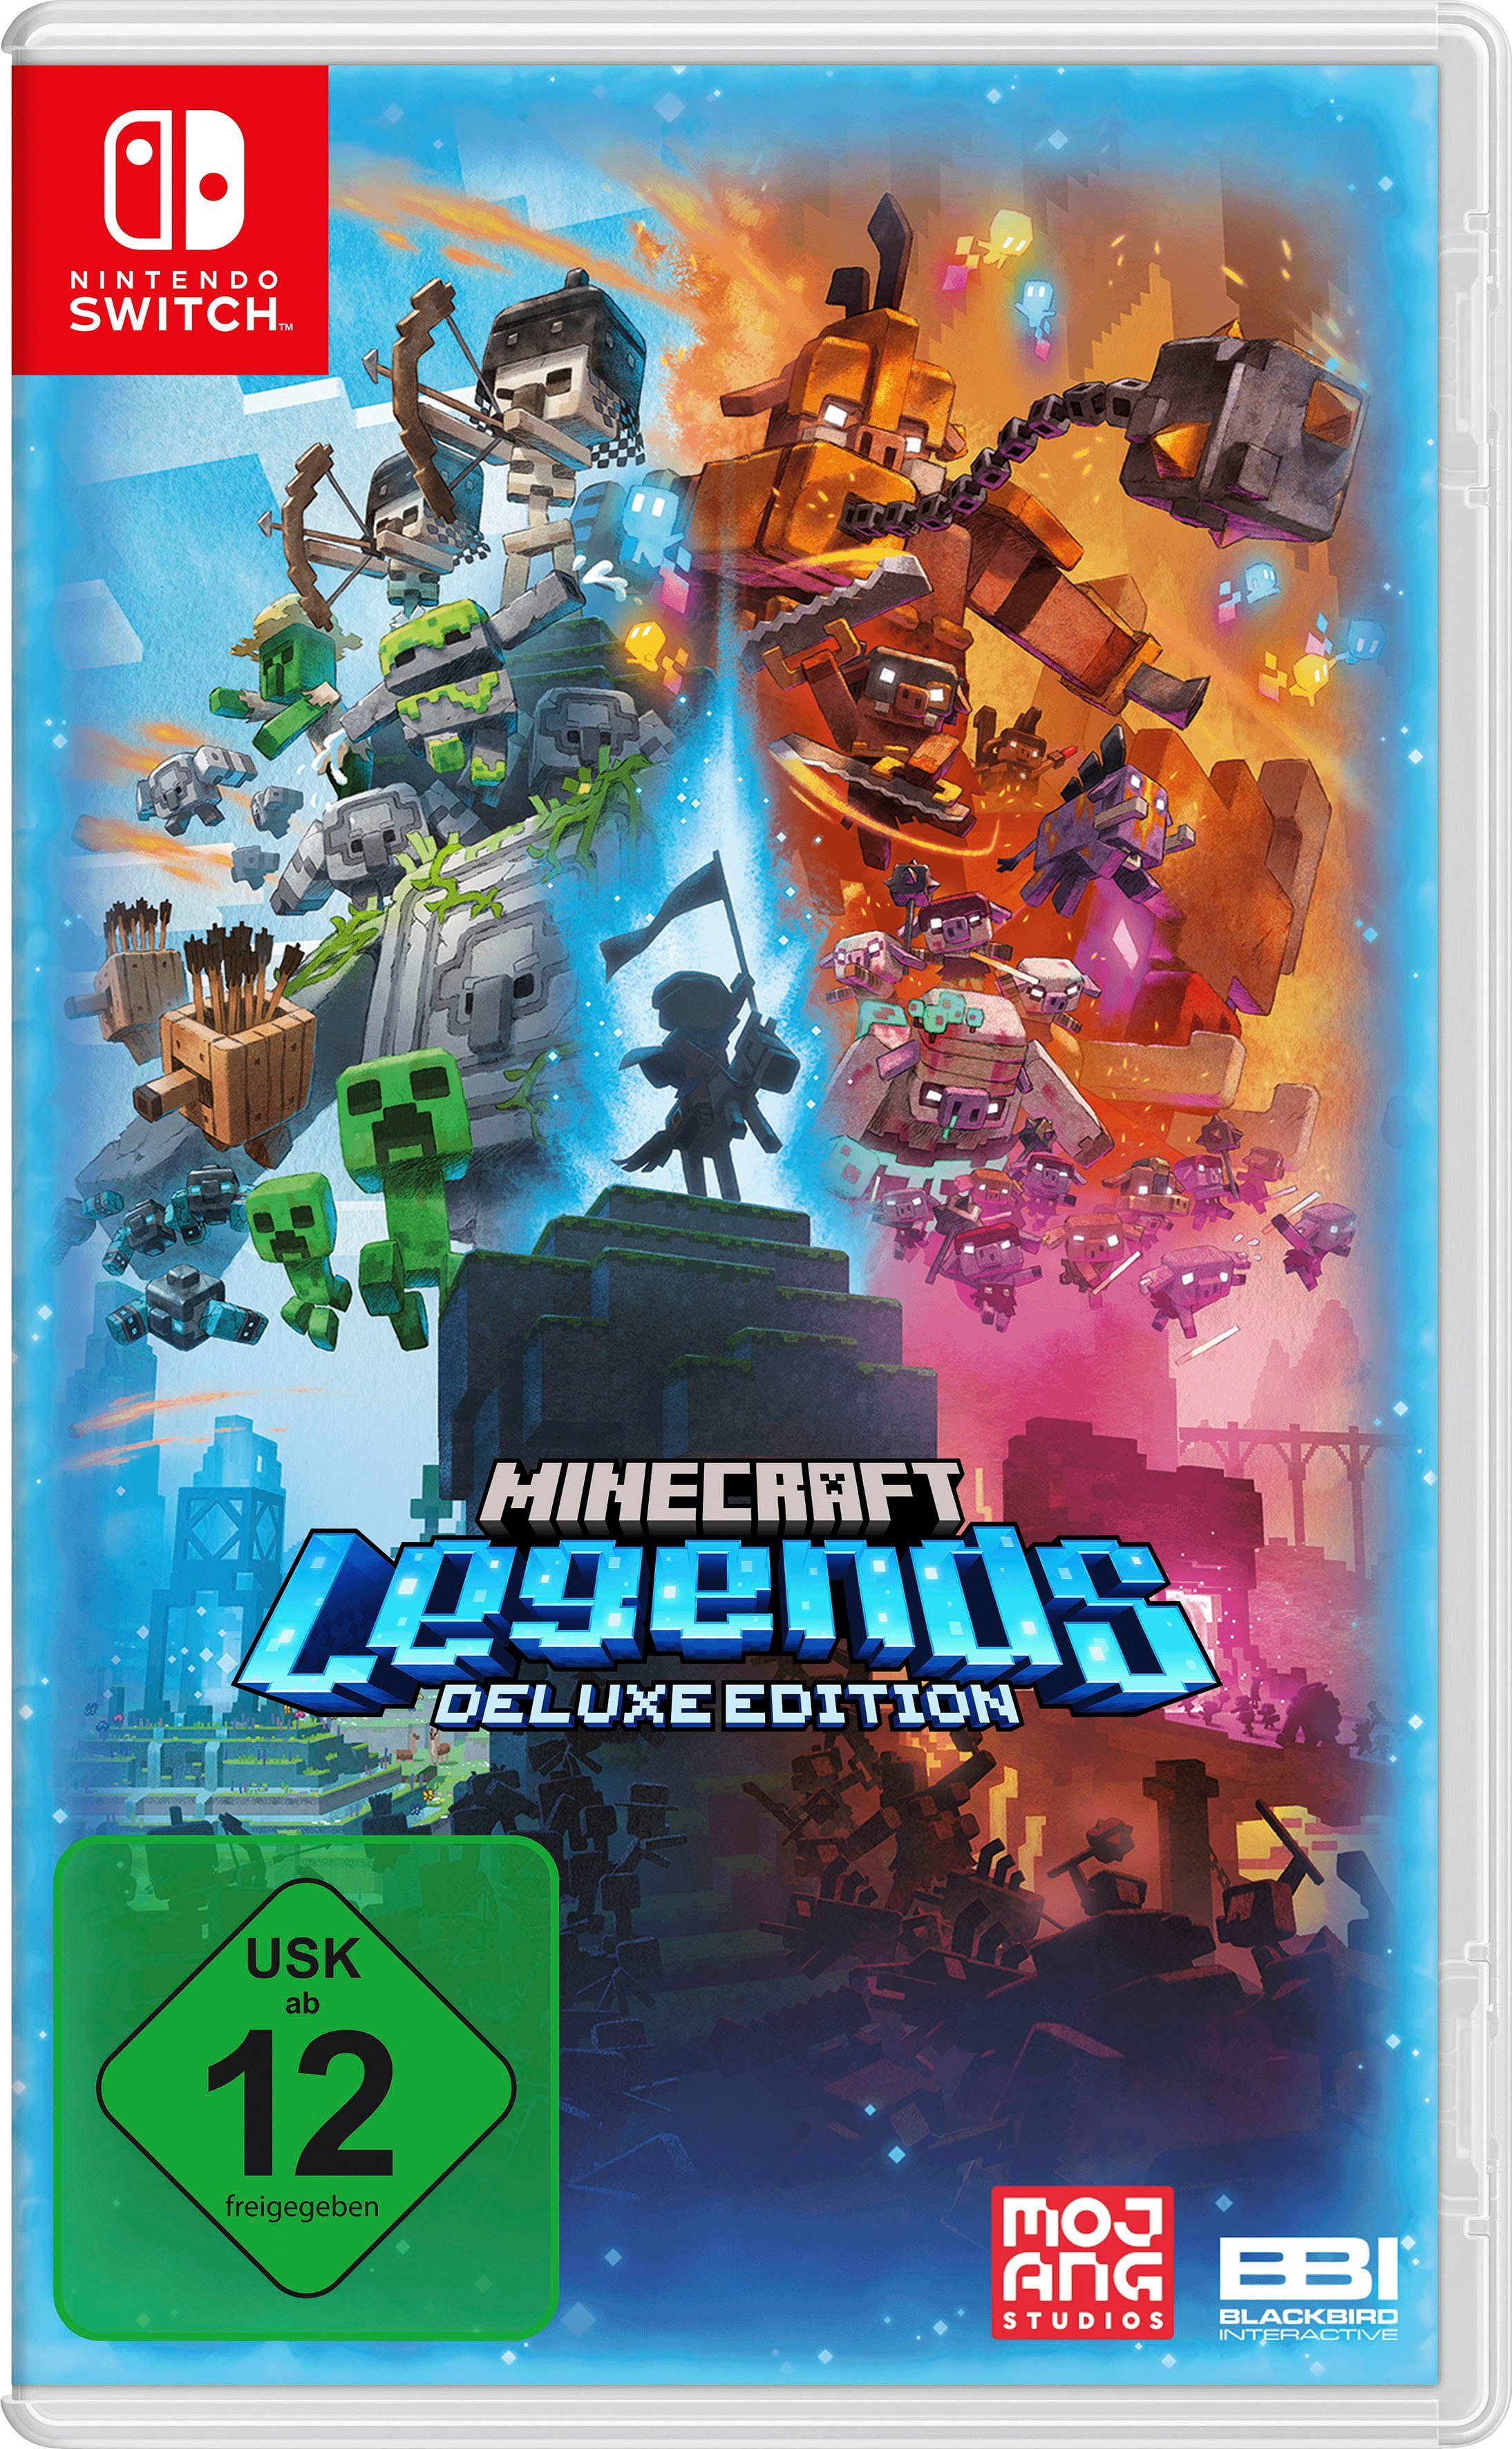 Minecraft Nintendo Switch Legends Edition Deluxe